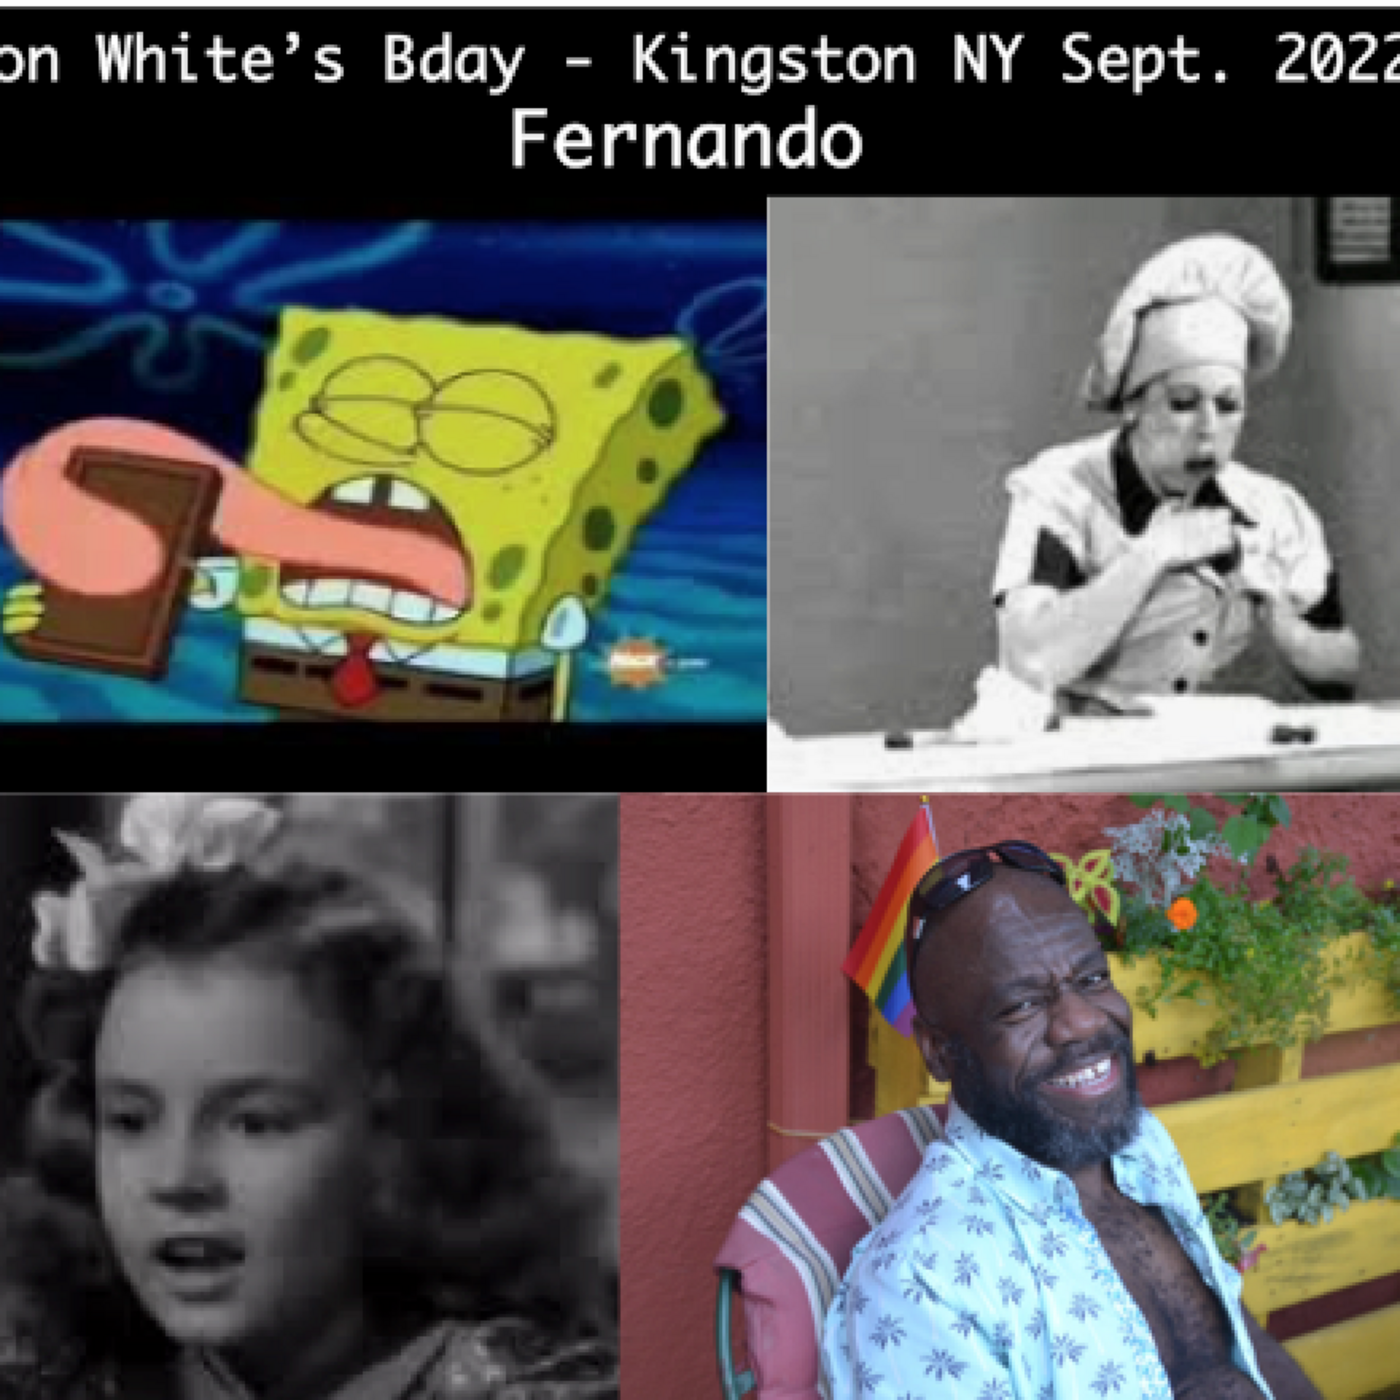 Episode 68: Jon White’s Birthday -  Kingston Live Recording - Sept 2022